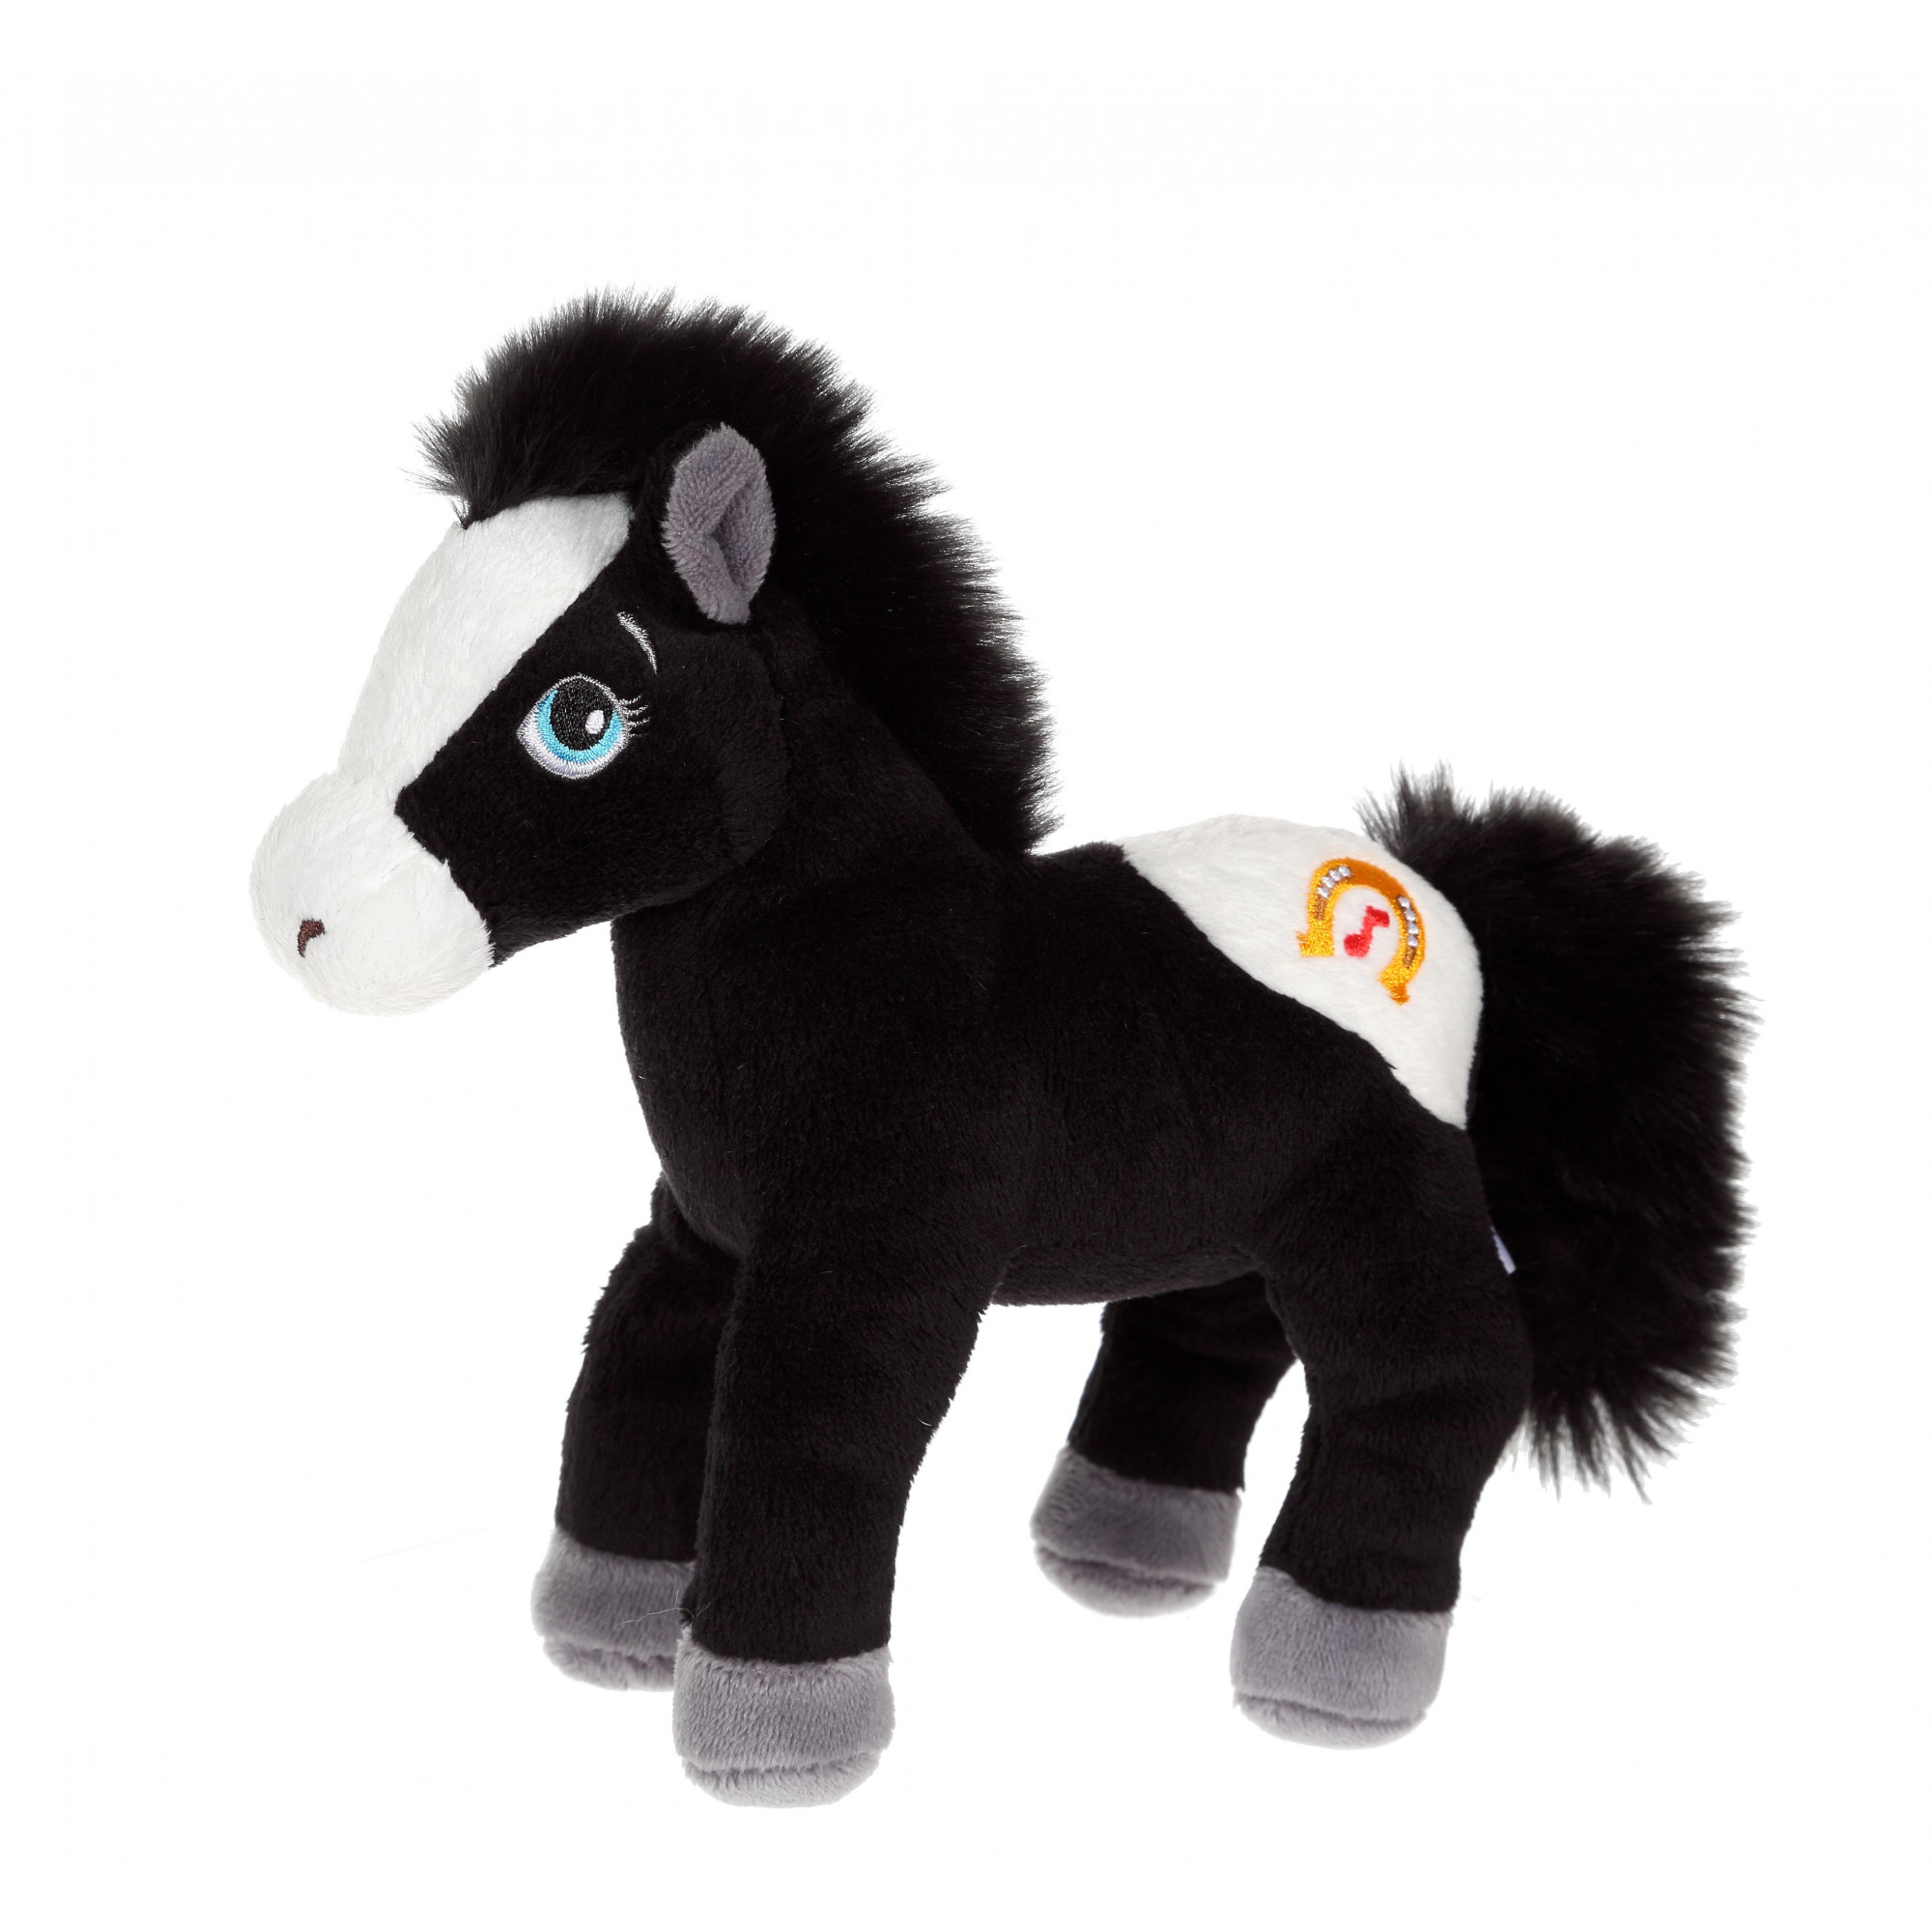 Kisco Horse with sound 22 cm - black